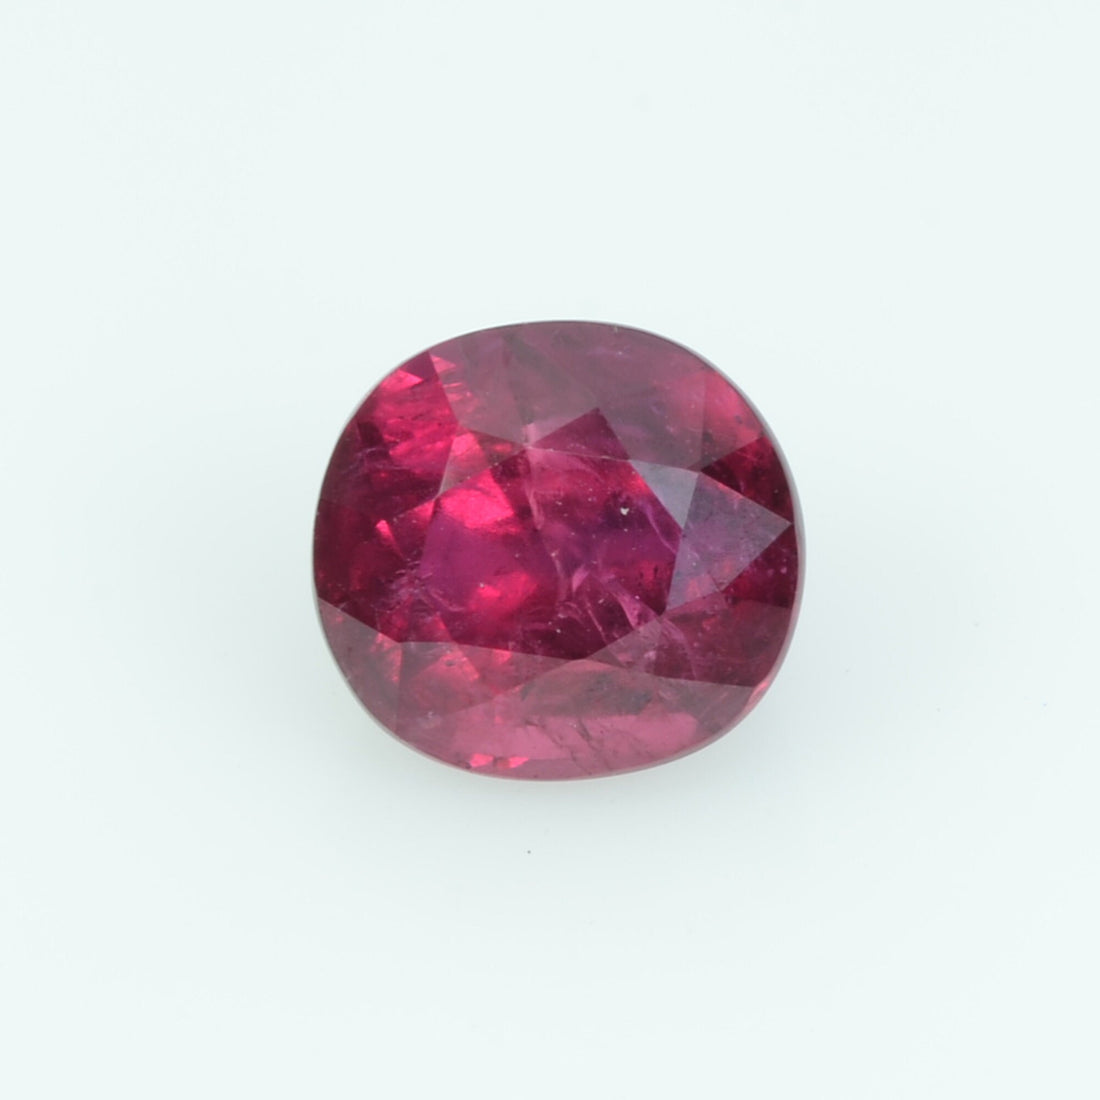 2.01 cts Natural Ruby Loose Gemstone Cushion Cut